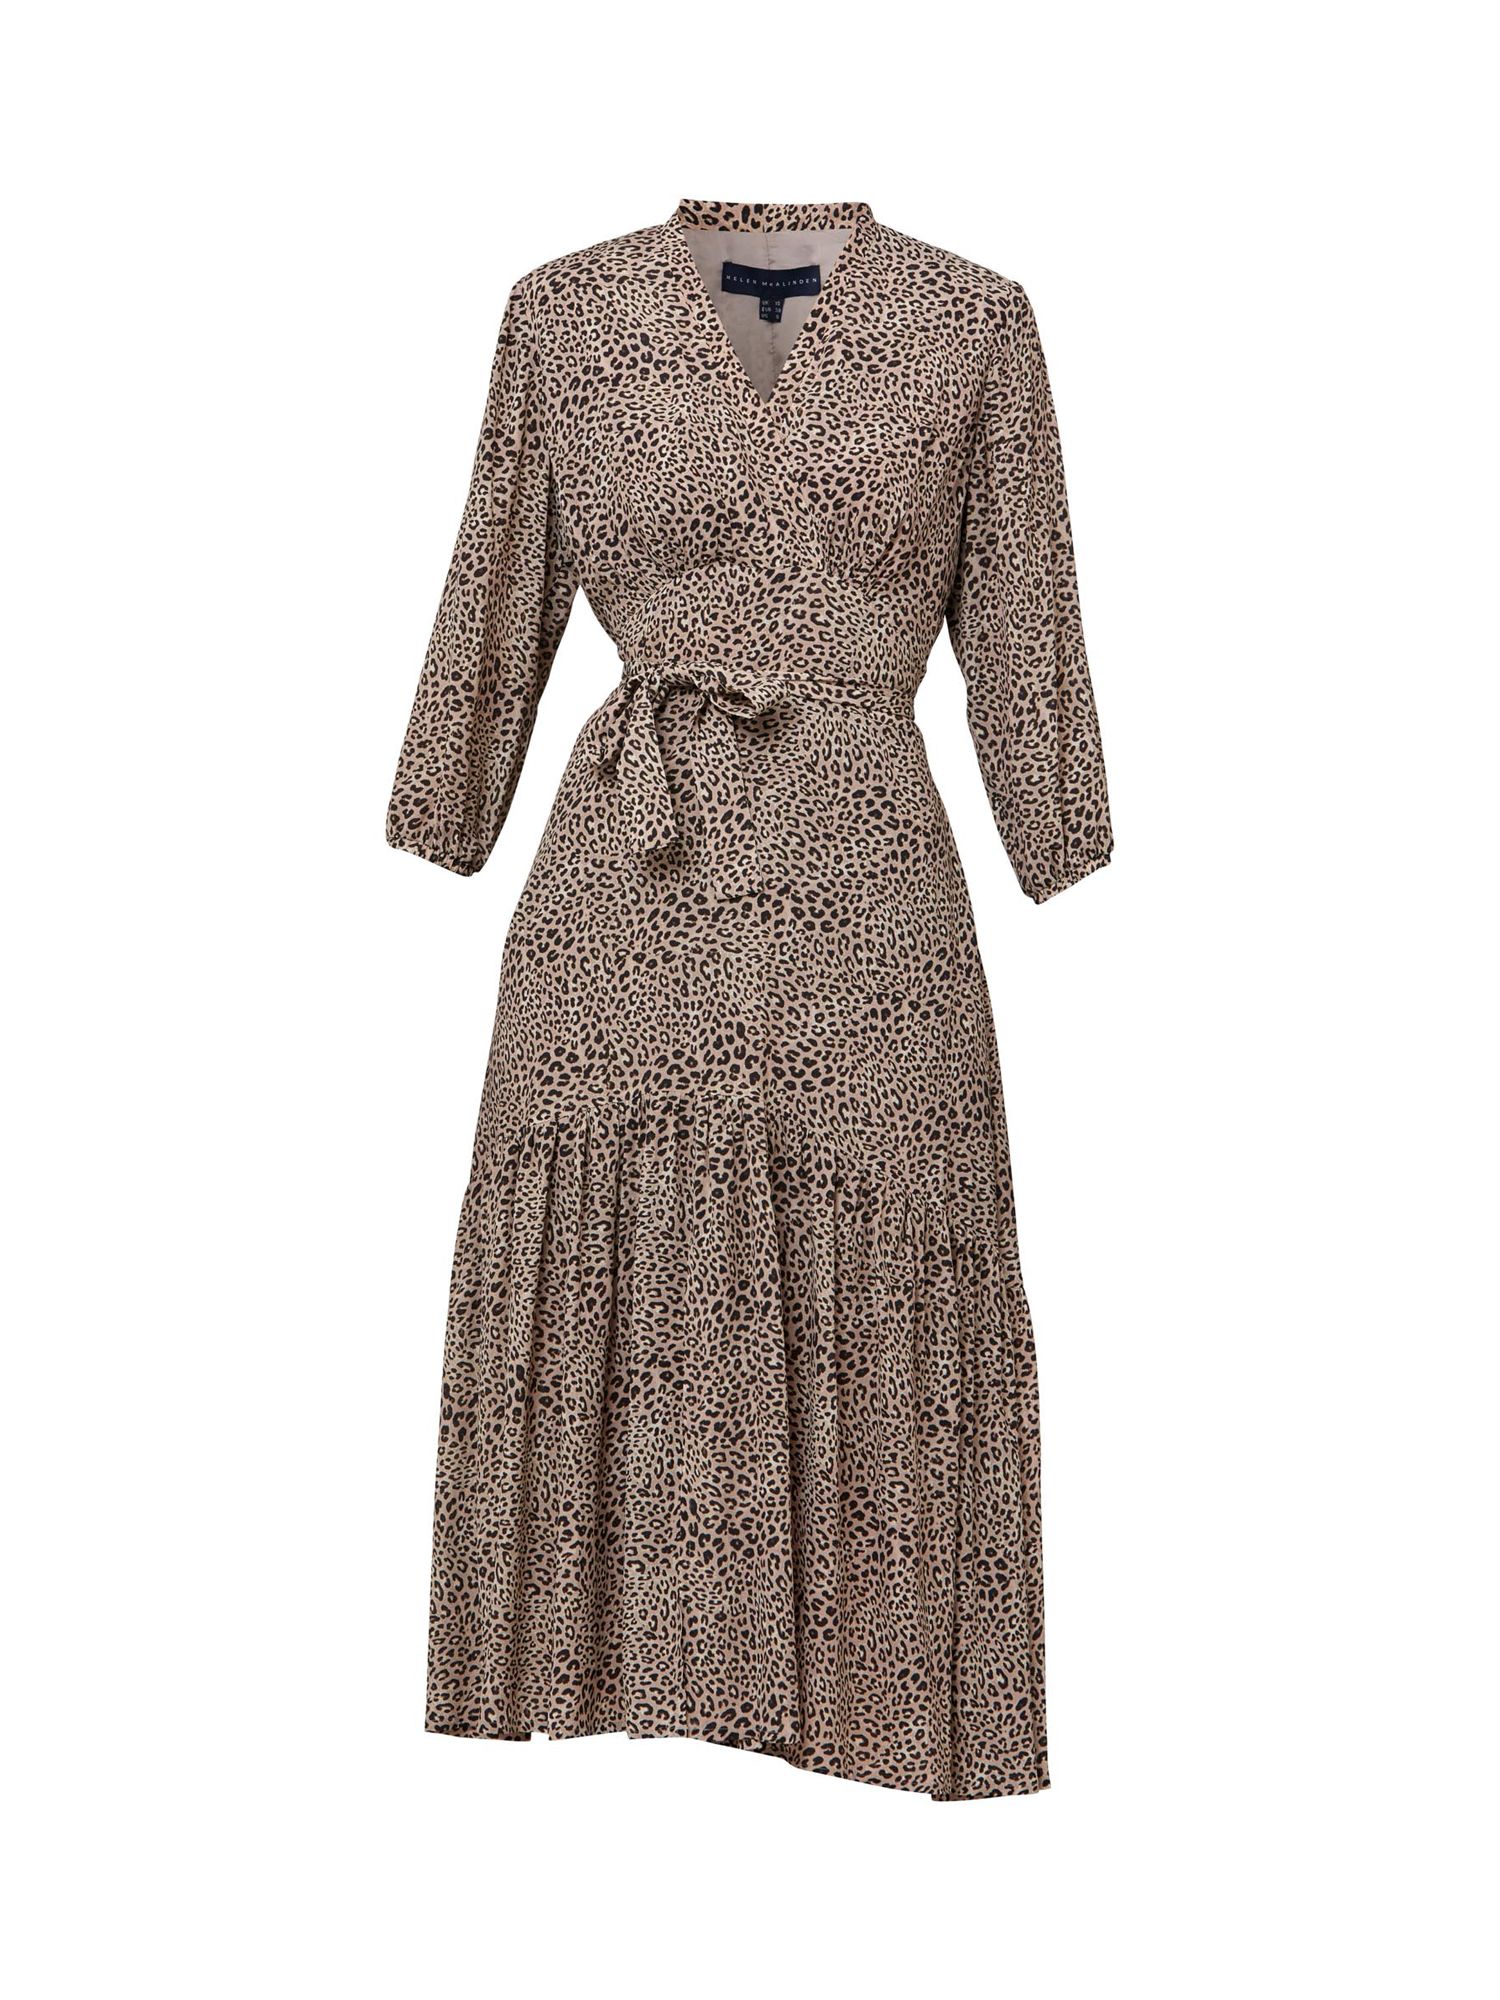 Helen McAlinden Beverley Animal Print Midi Dress, Multi, 14